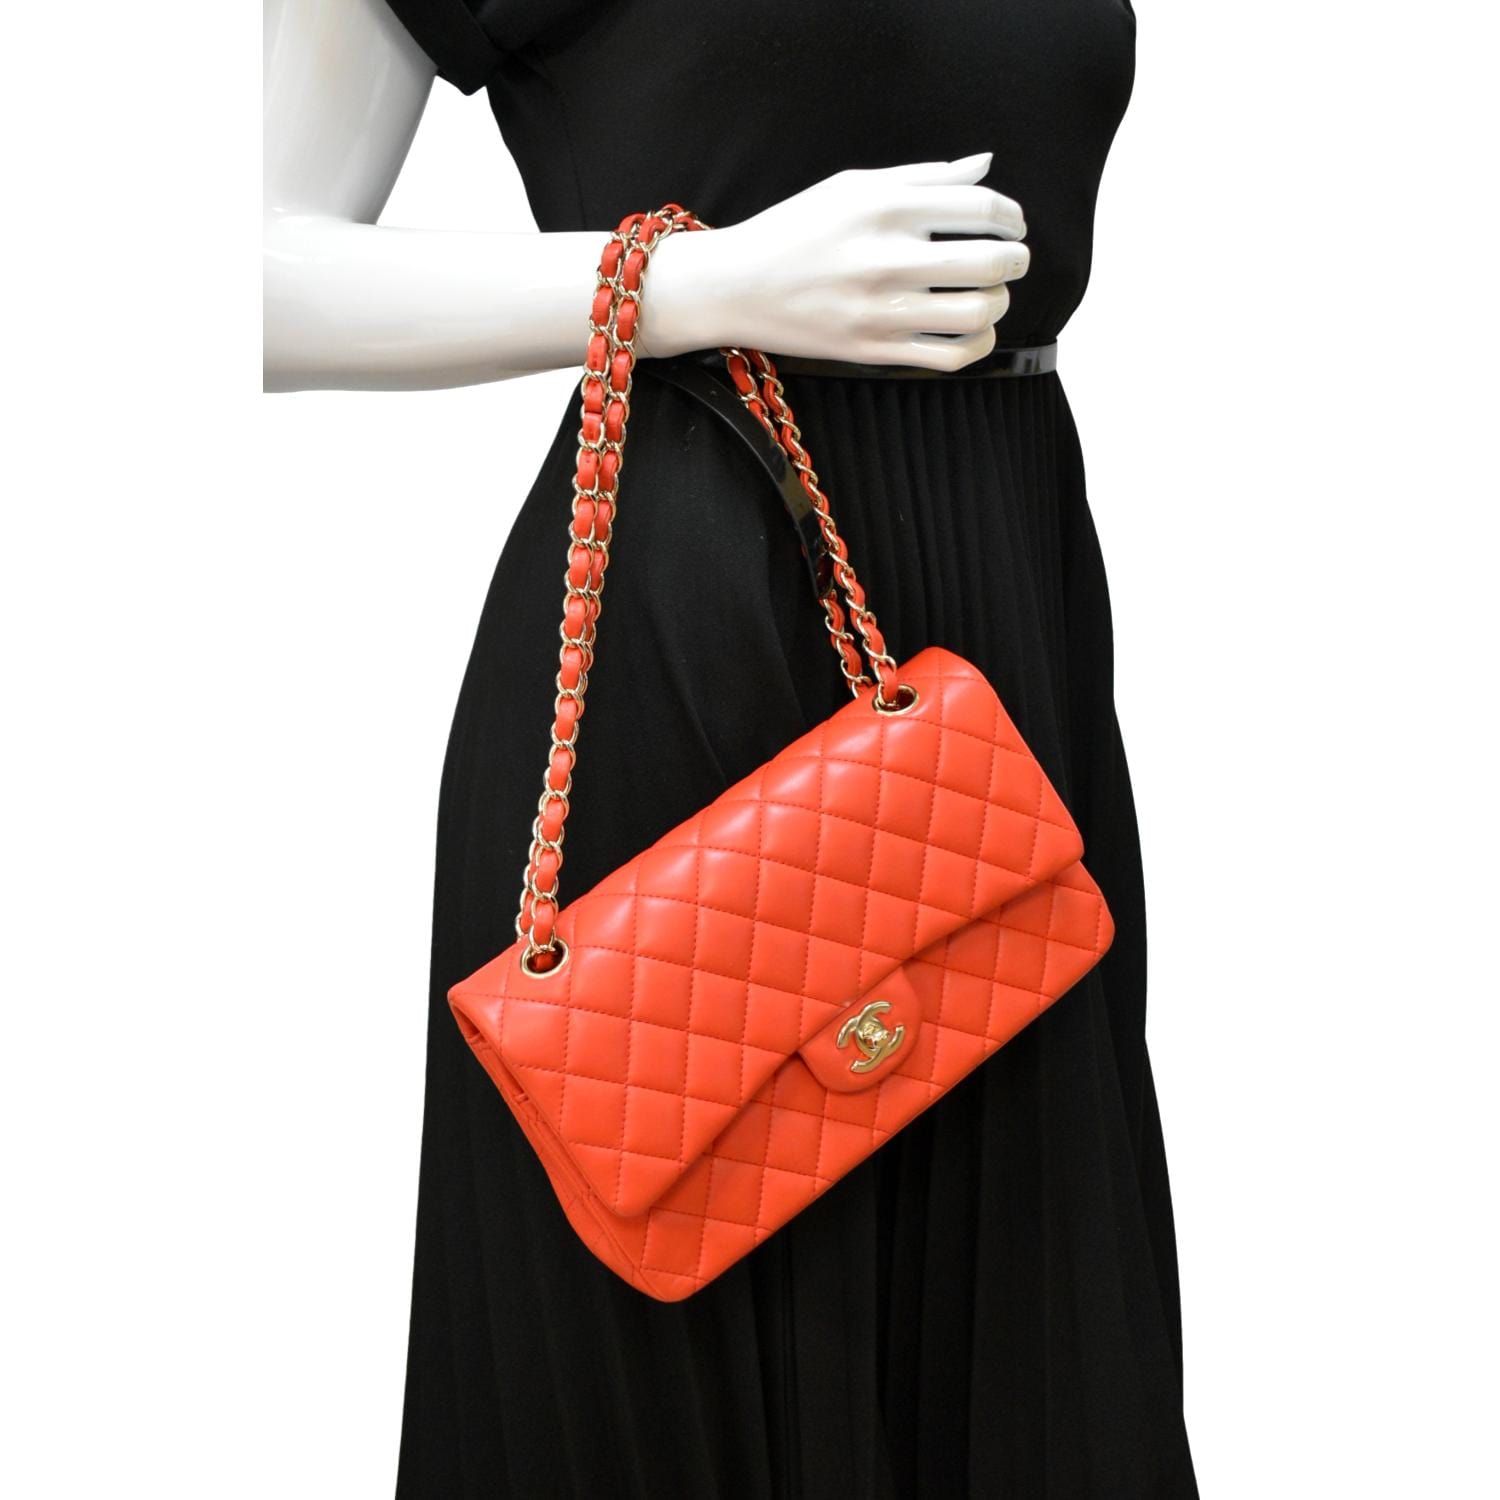 Chanel Classic Double Flap Leather Shoulder Bag